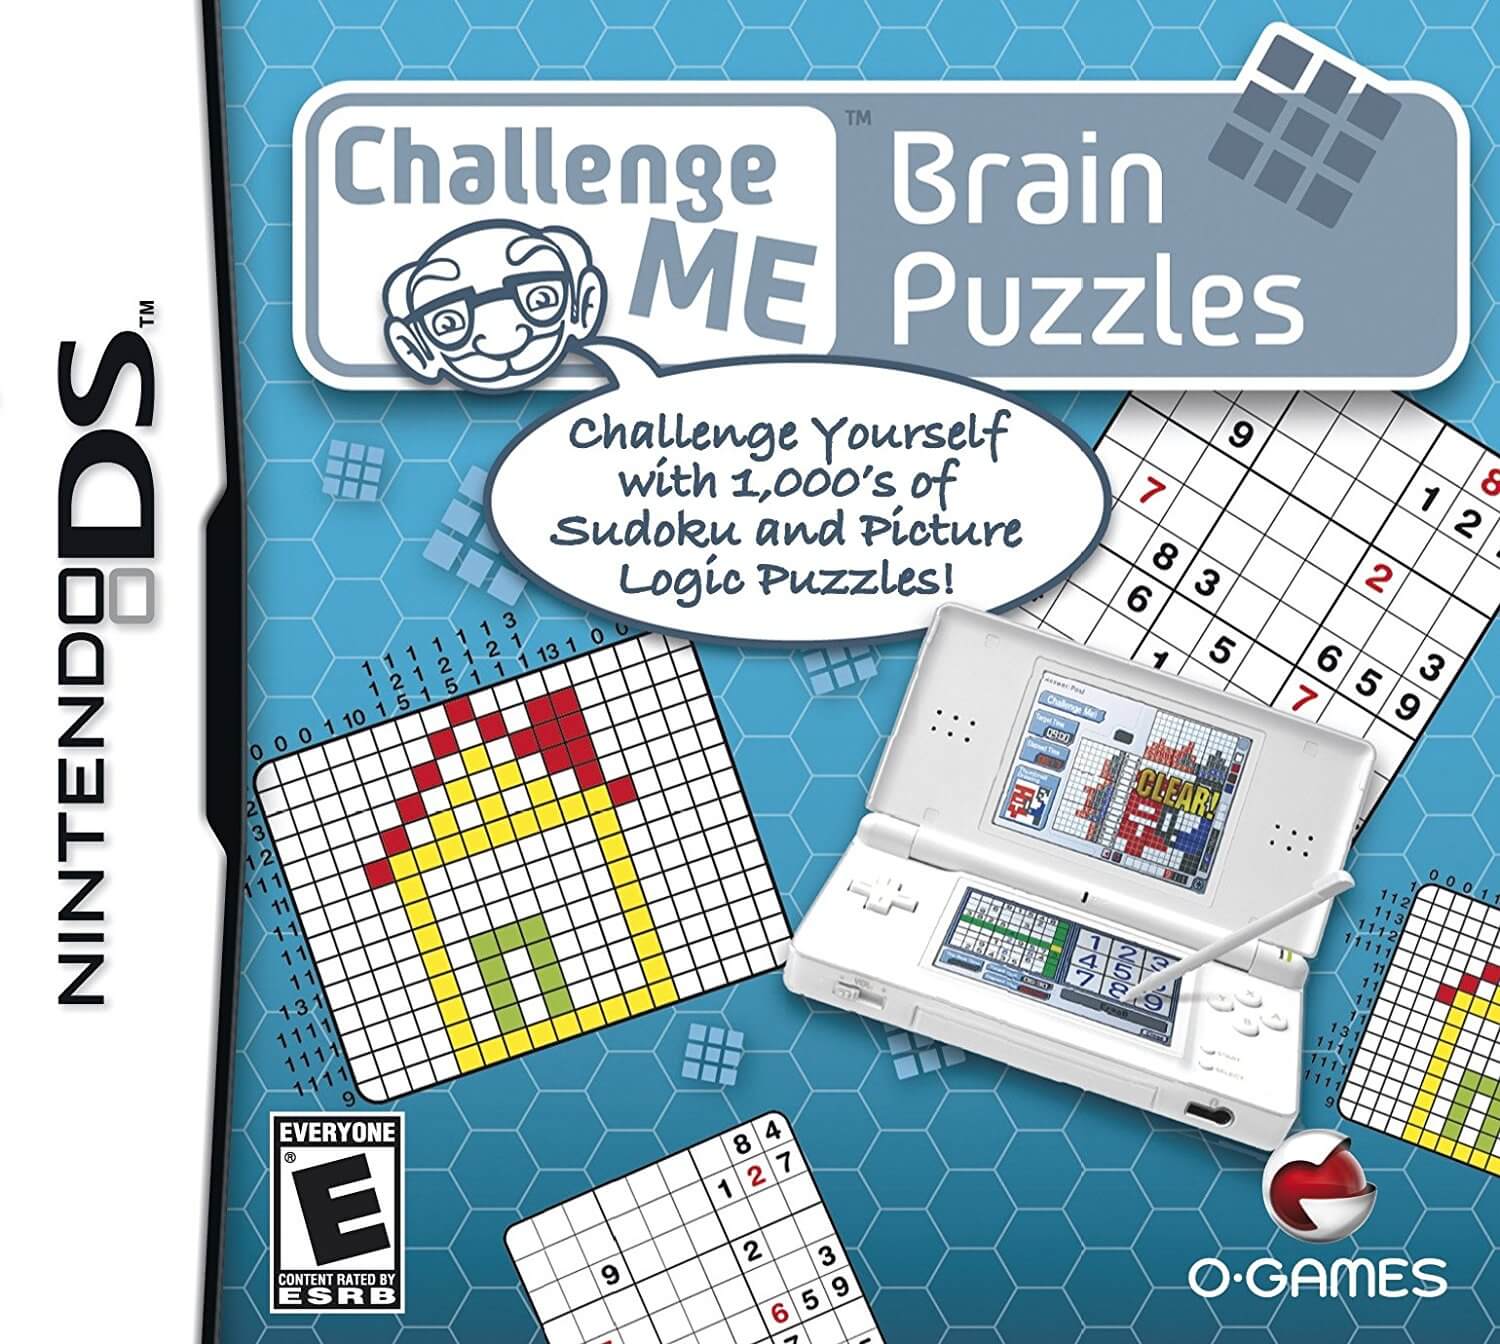 Brain puzzle game. Brain Puzzles логические игры. Головоломка NDS. Brain games the challenging Puzzle. Nintendo DS головоломка.